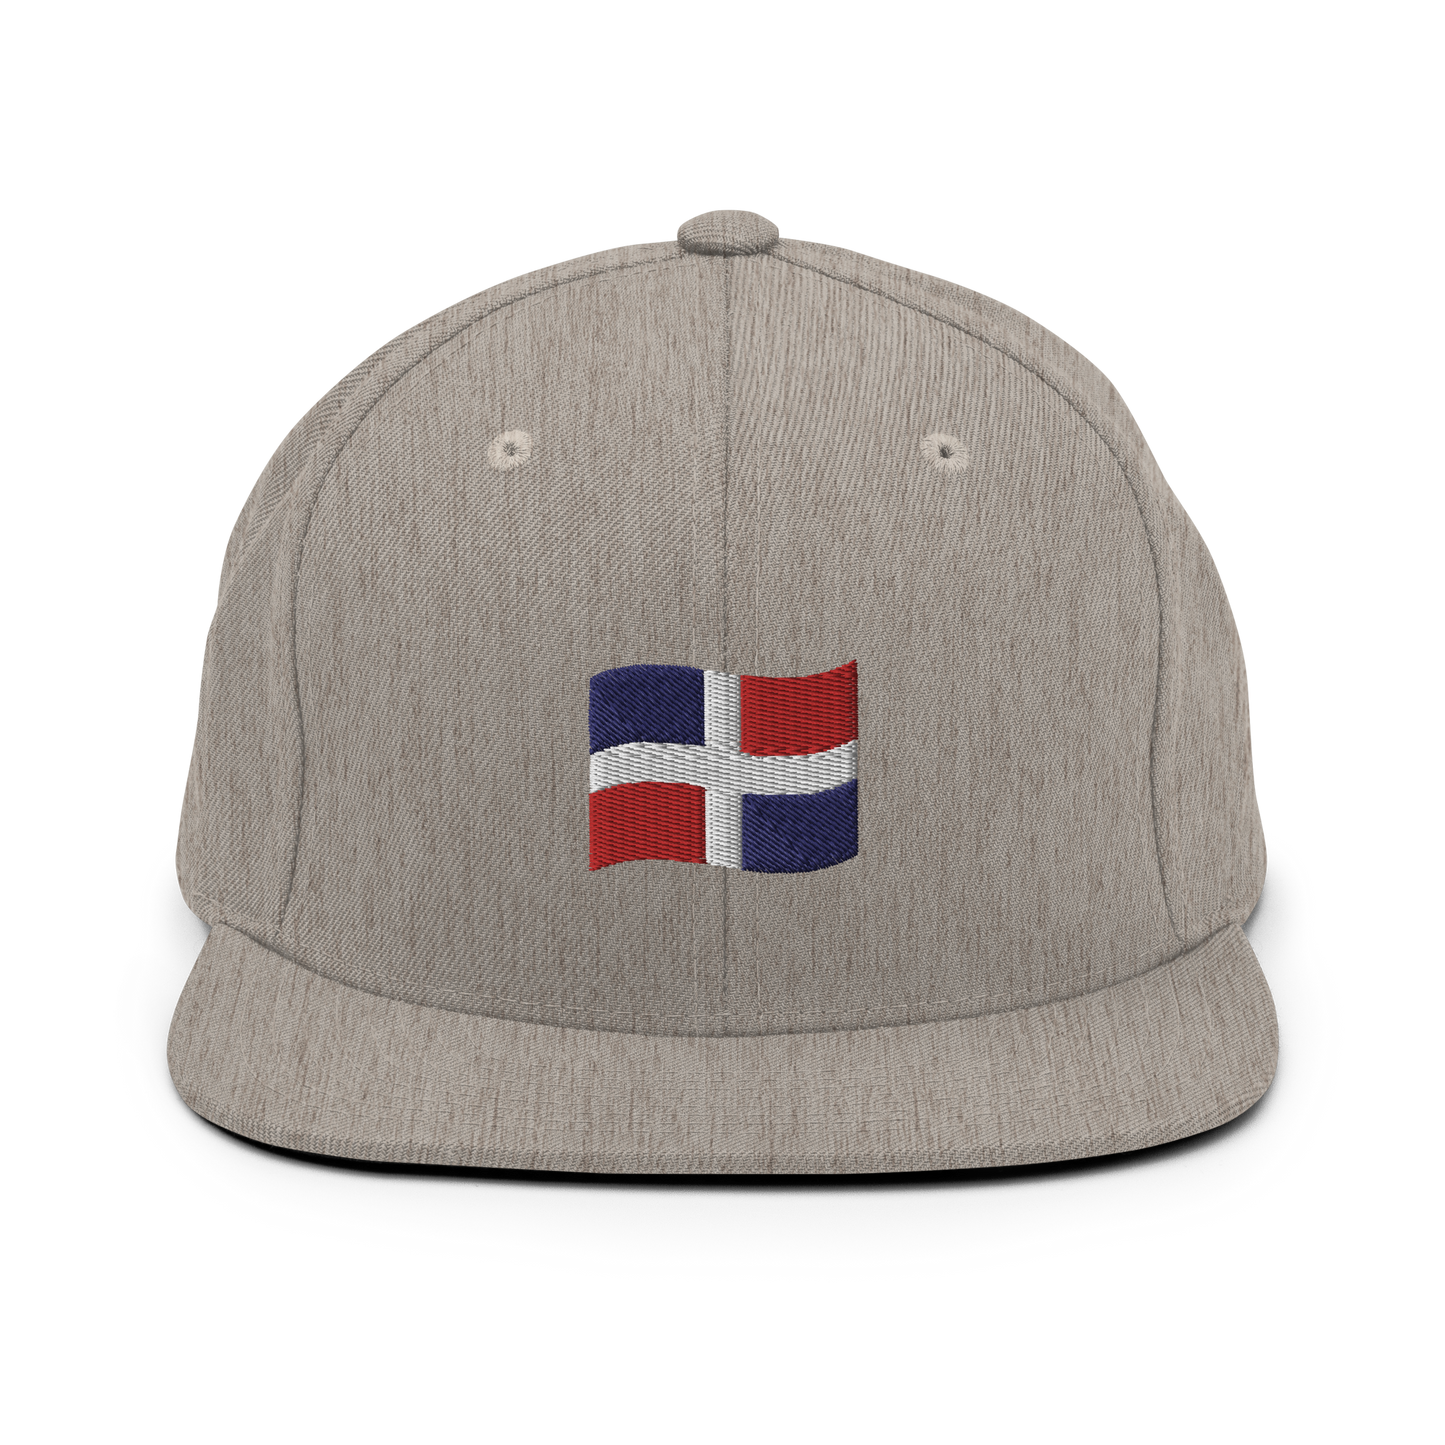 Dominican Republic Flag Emoji Snapback Hat